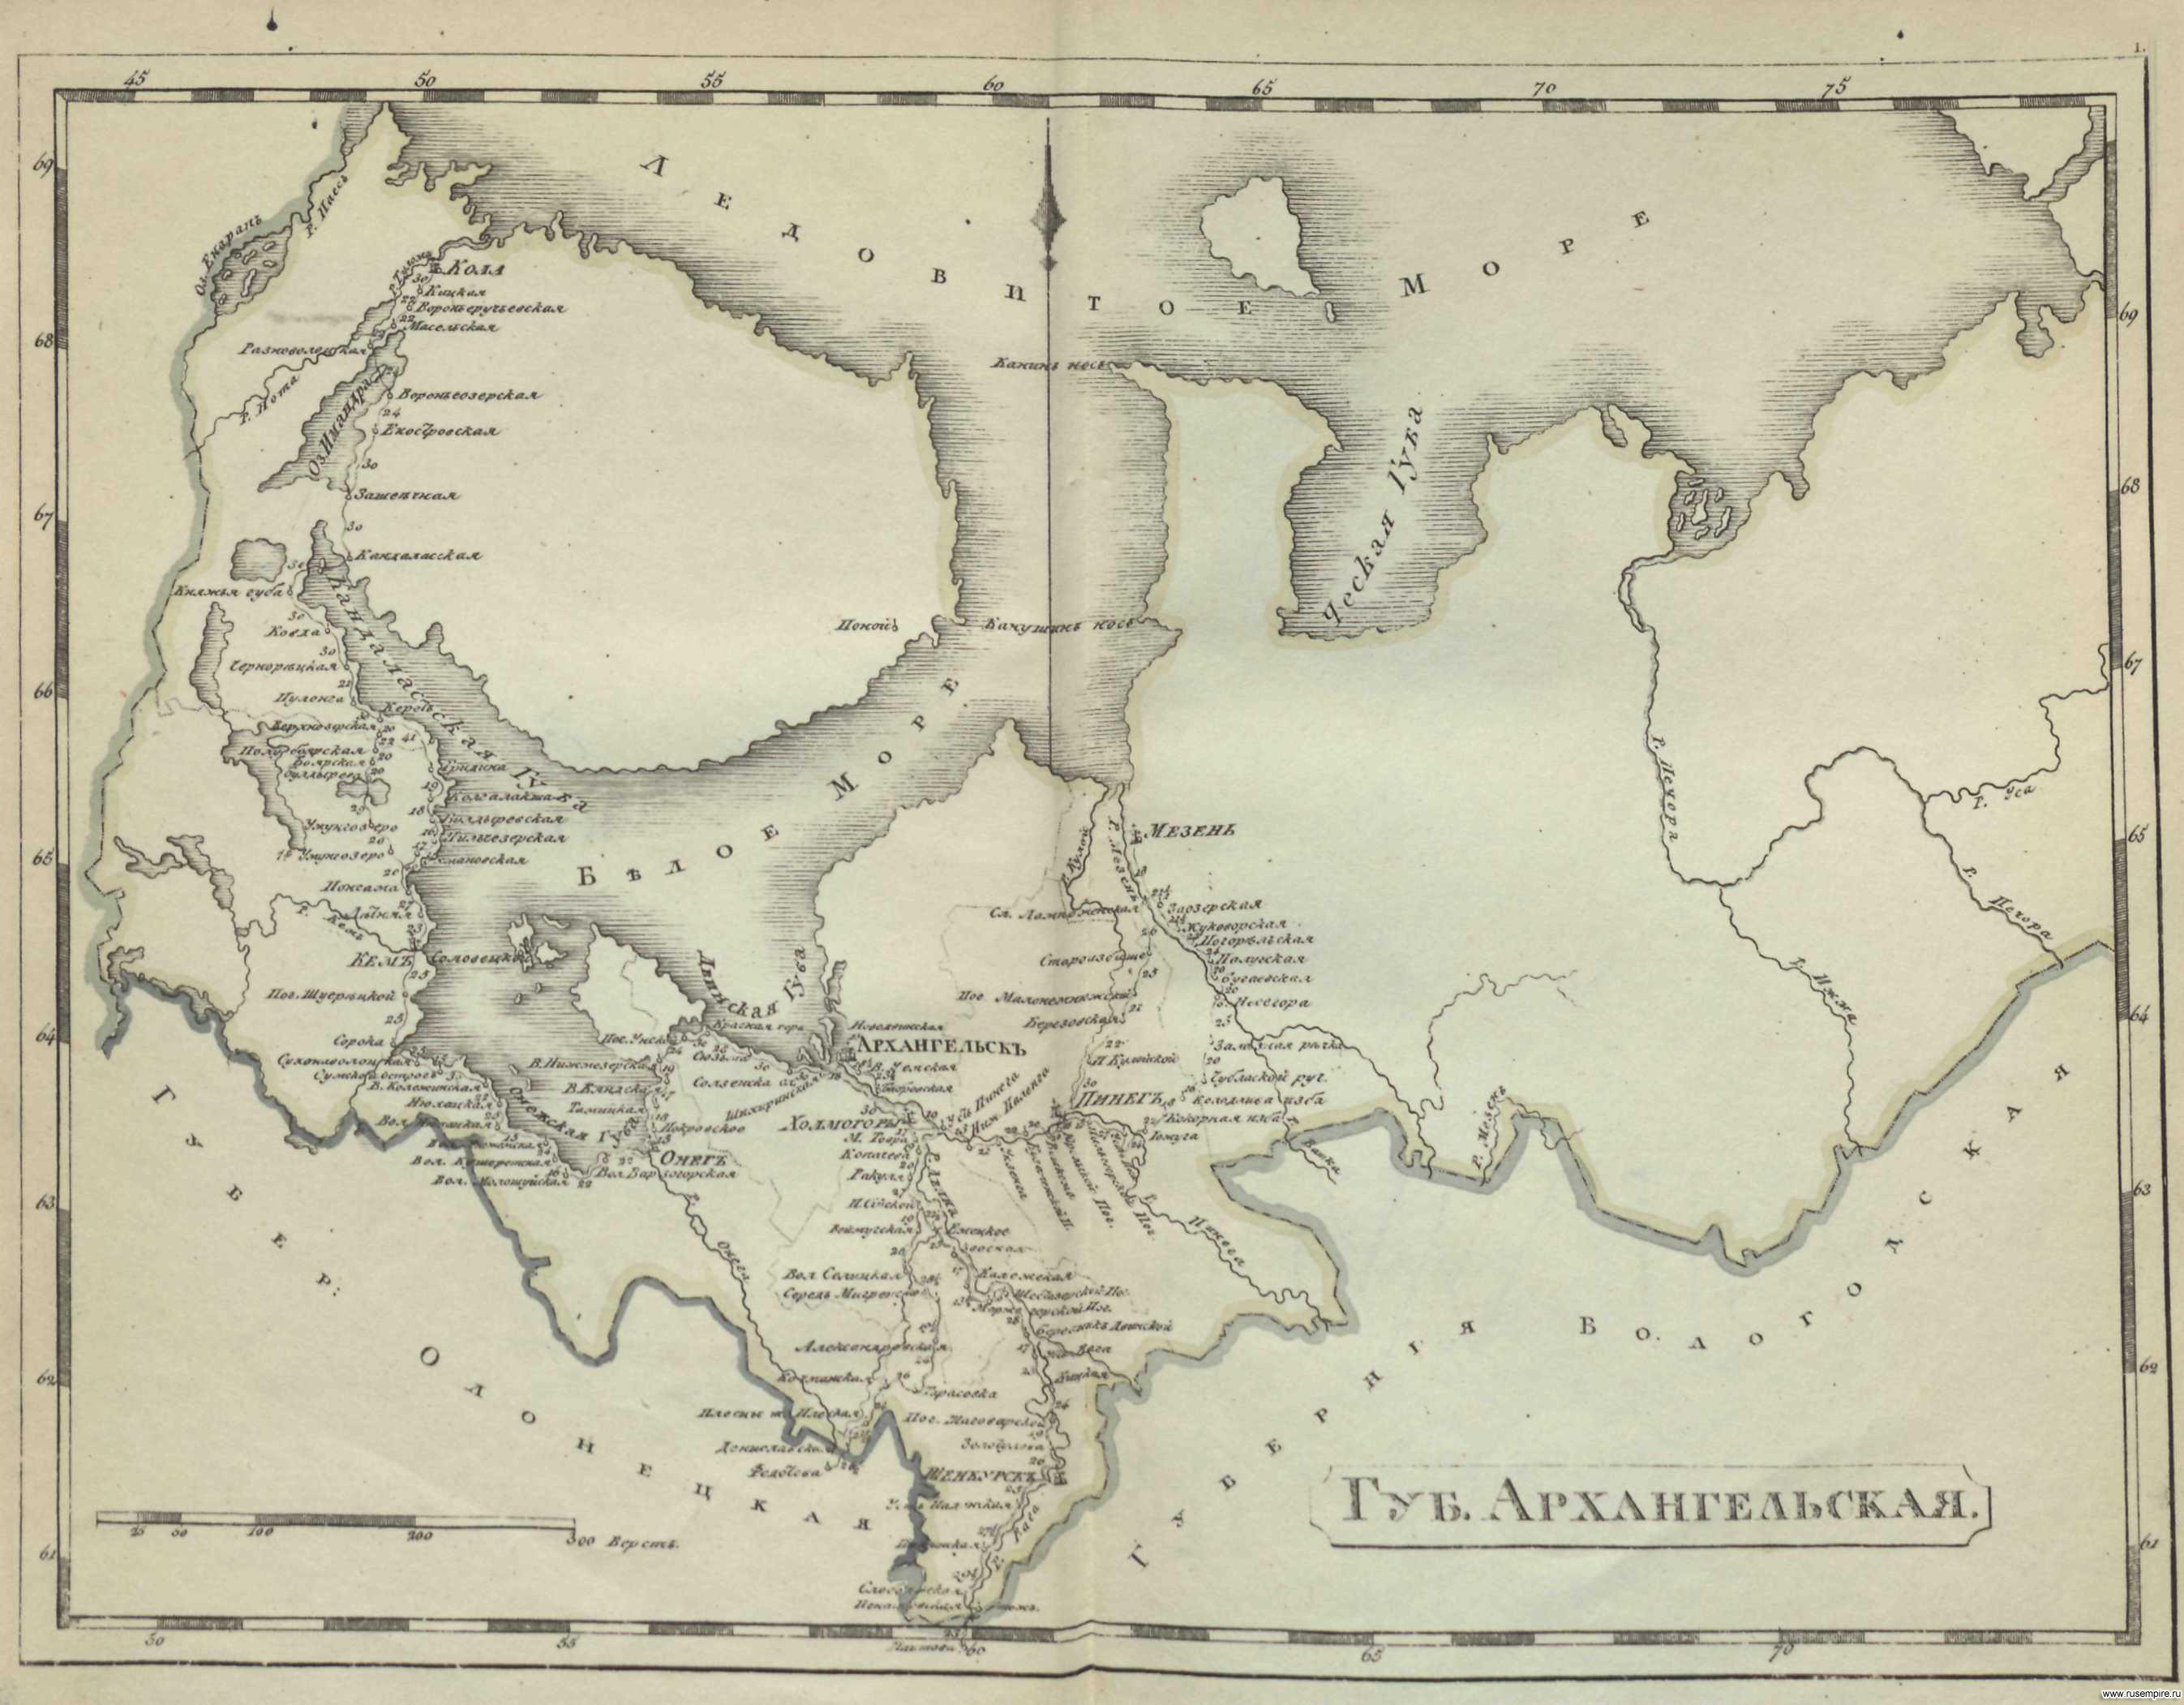 https://www.rusempire.ru/images/gallery/originals/karti_6/atlas_rossiyskoy_imperii_1808_goda_28/atlas_rossiyskoy_imperii_1808_goda_20150107_1214478225.jpg